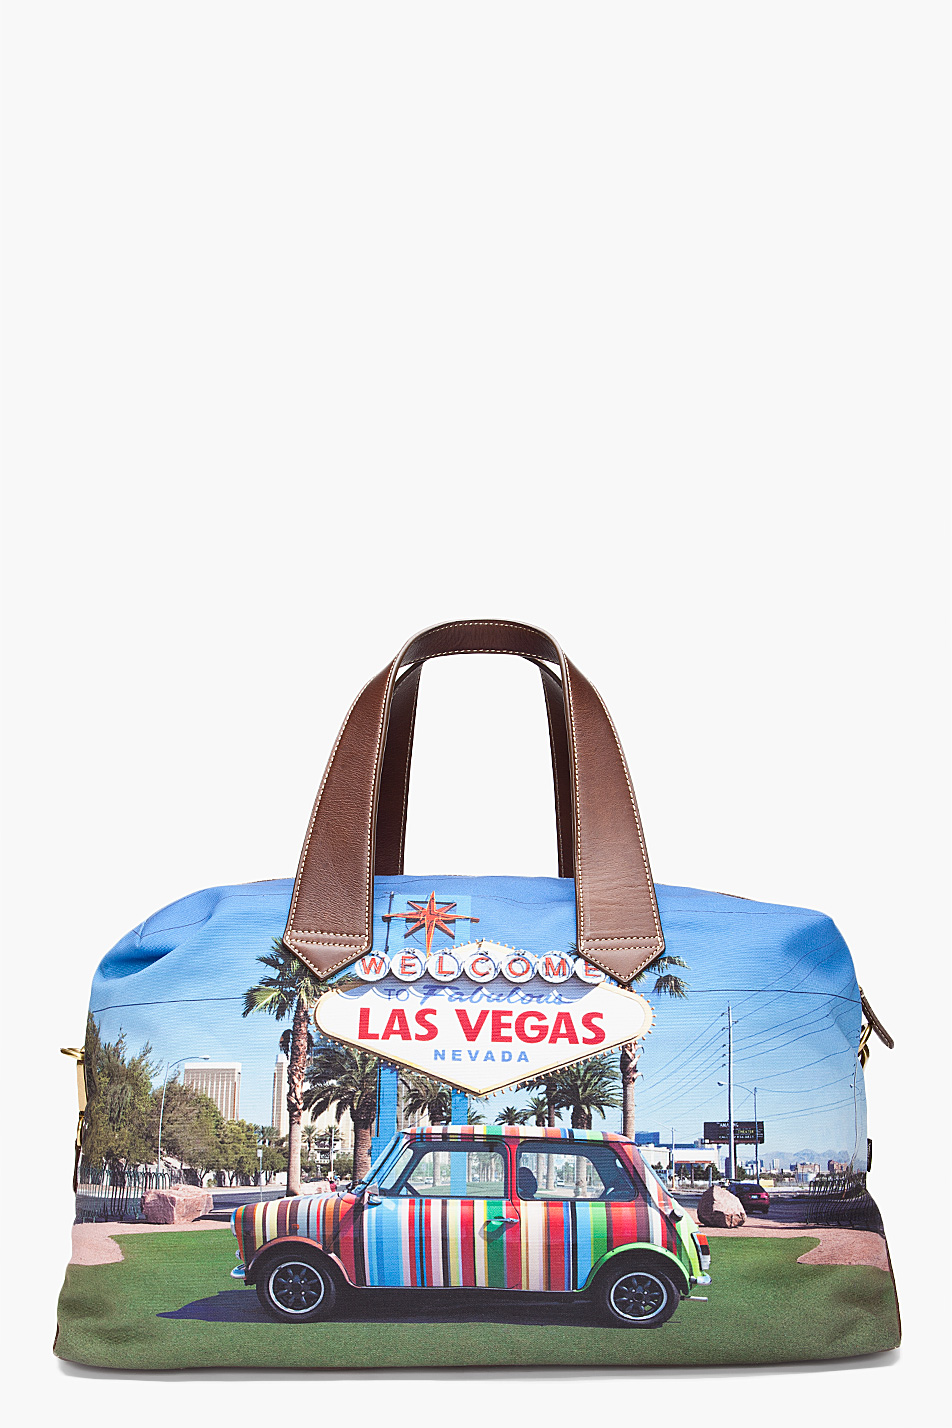 Paul Smith Mini Las Vegas Flight Bag for Men - Lyst